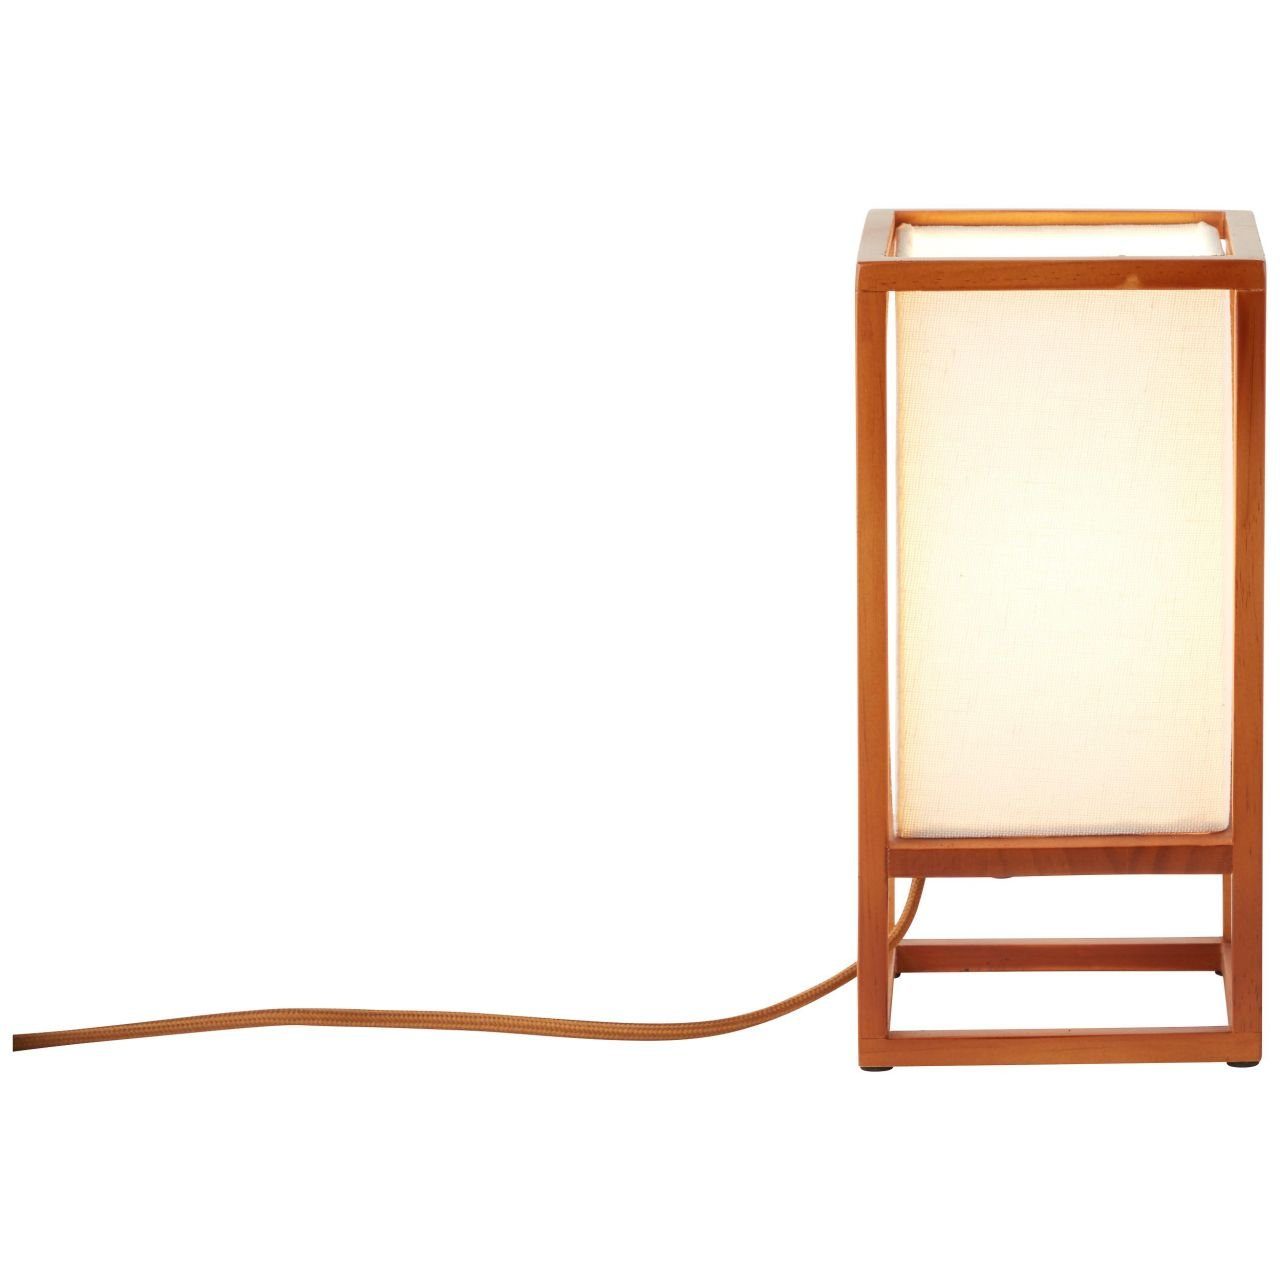 Lampe, 25cm 40W, D45, Mit Brilliant natur/weiß, Seaside Sch Tischleuchte E14, Seaside, Tischleuchte 1x